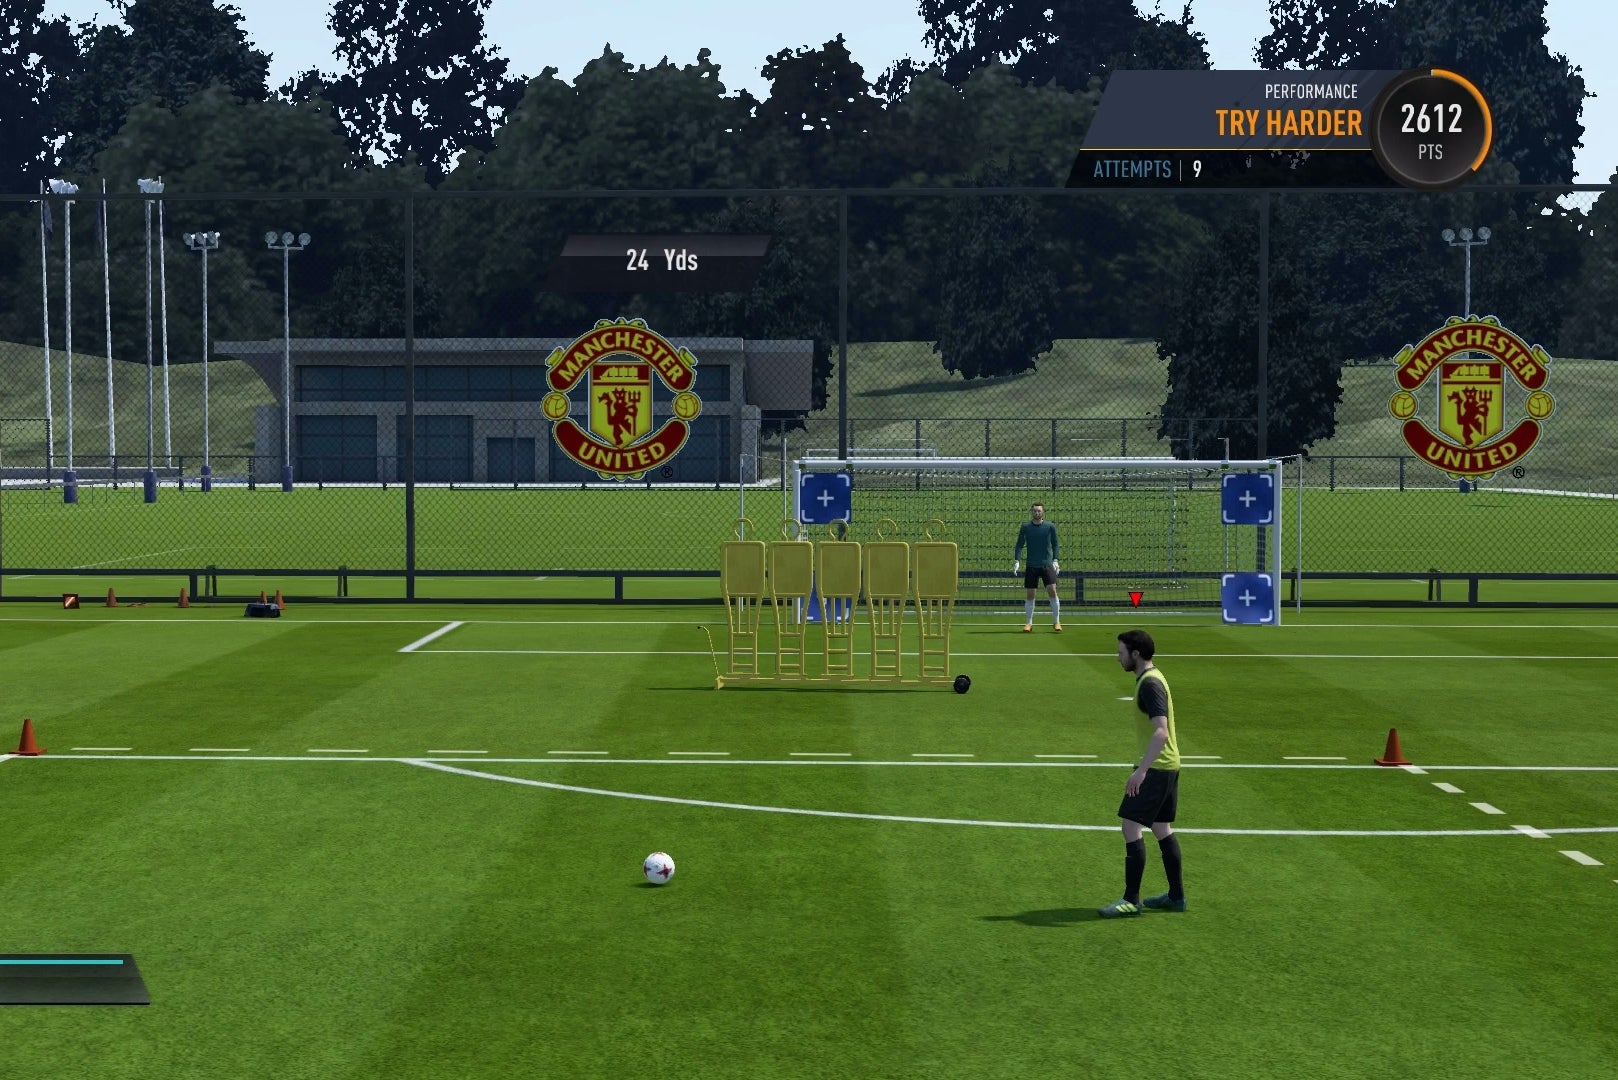 Image for FIFA 19 free kicks, penalties, and set pieces - how to take free kicks, score penalties and more